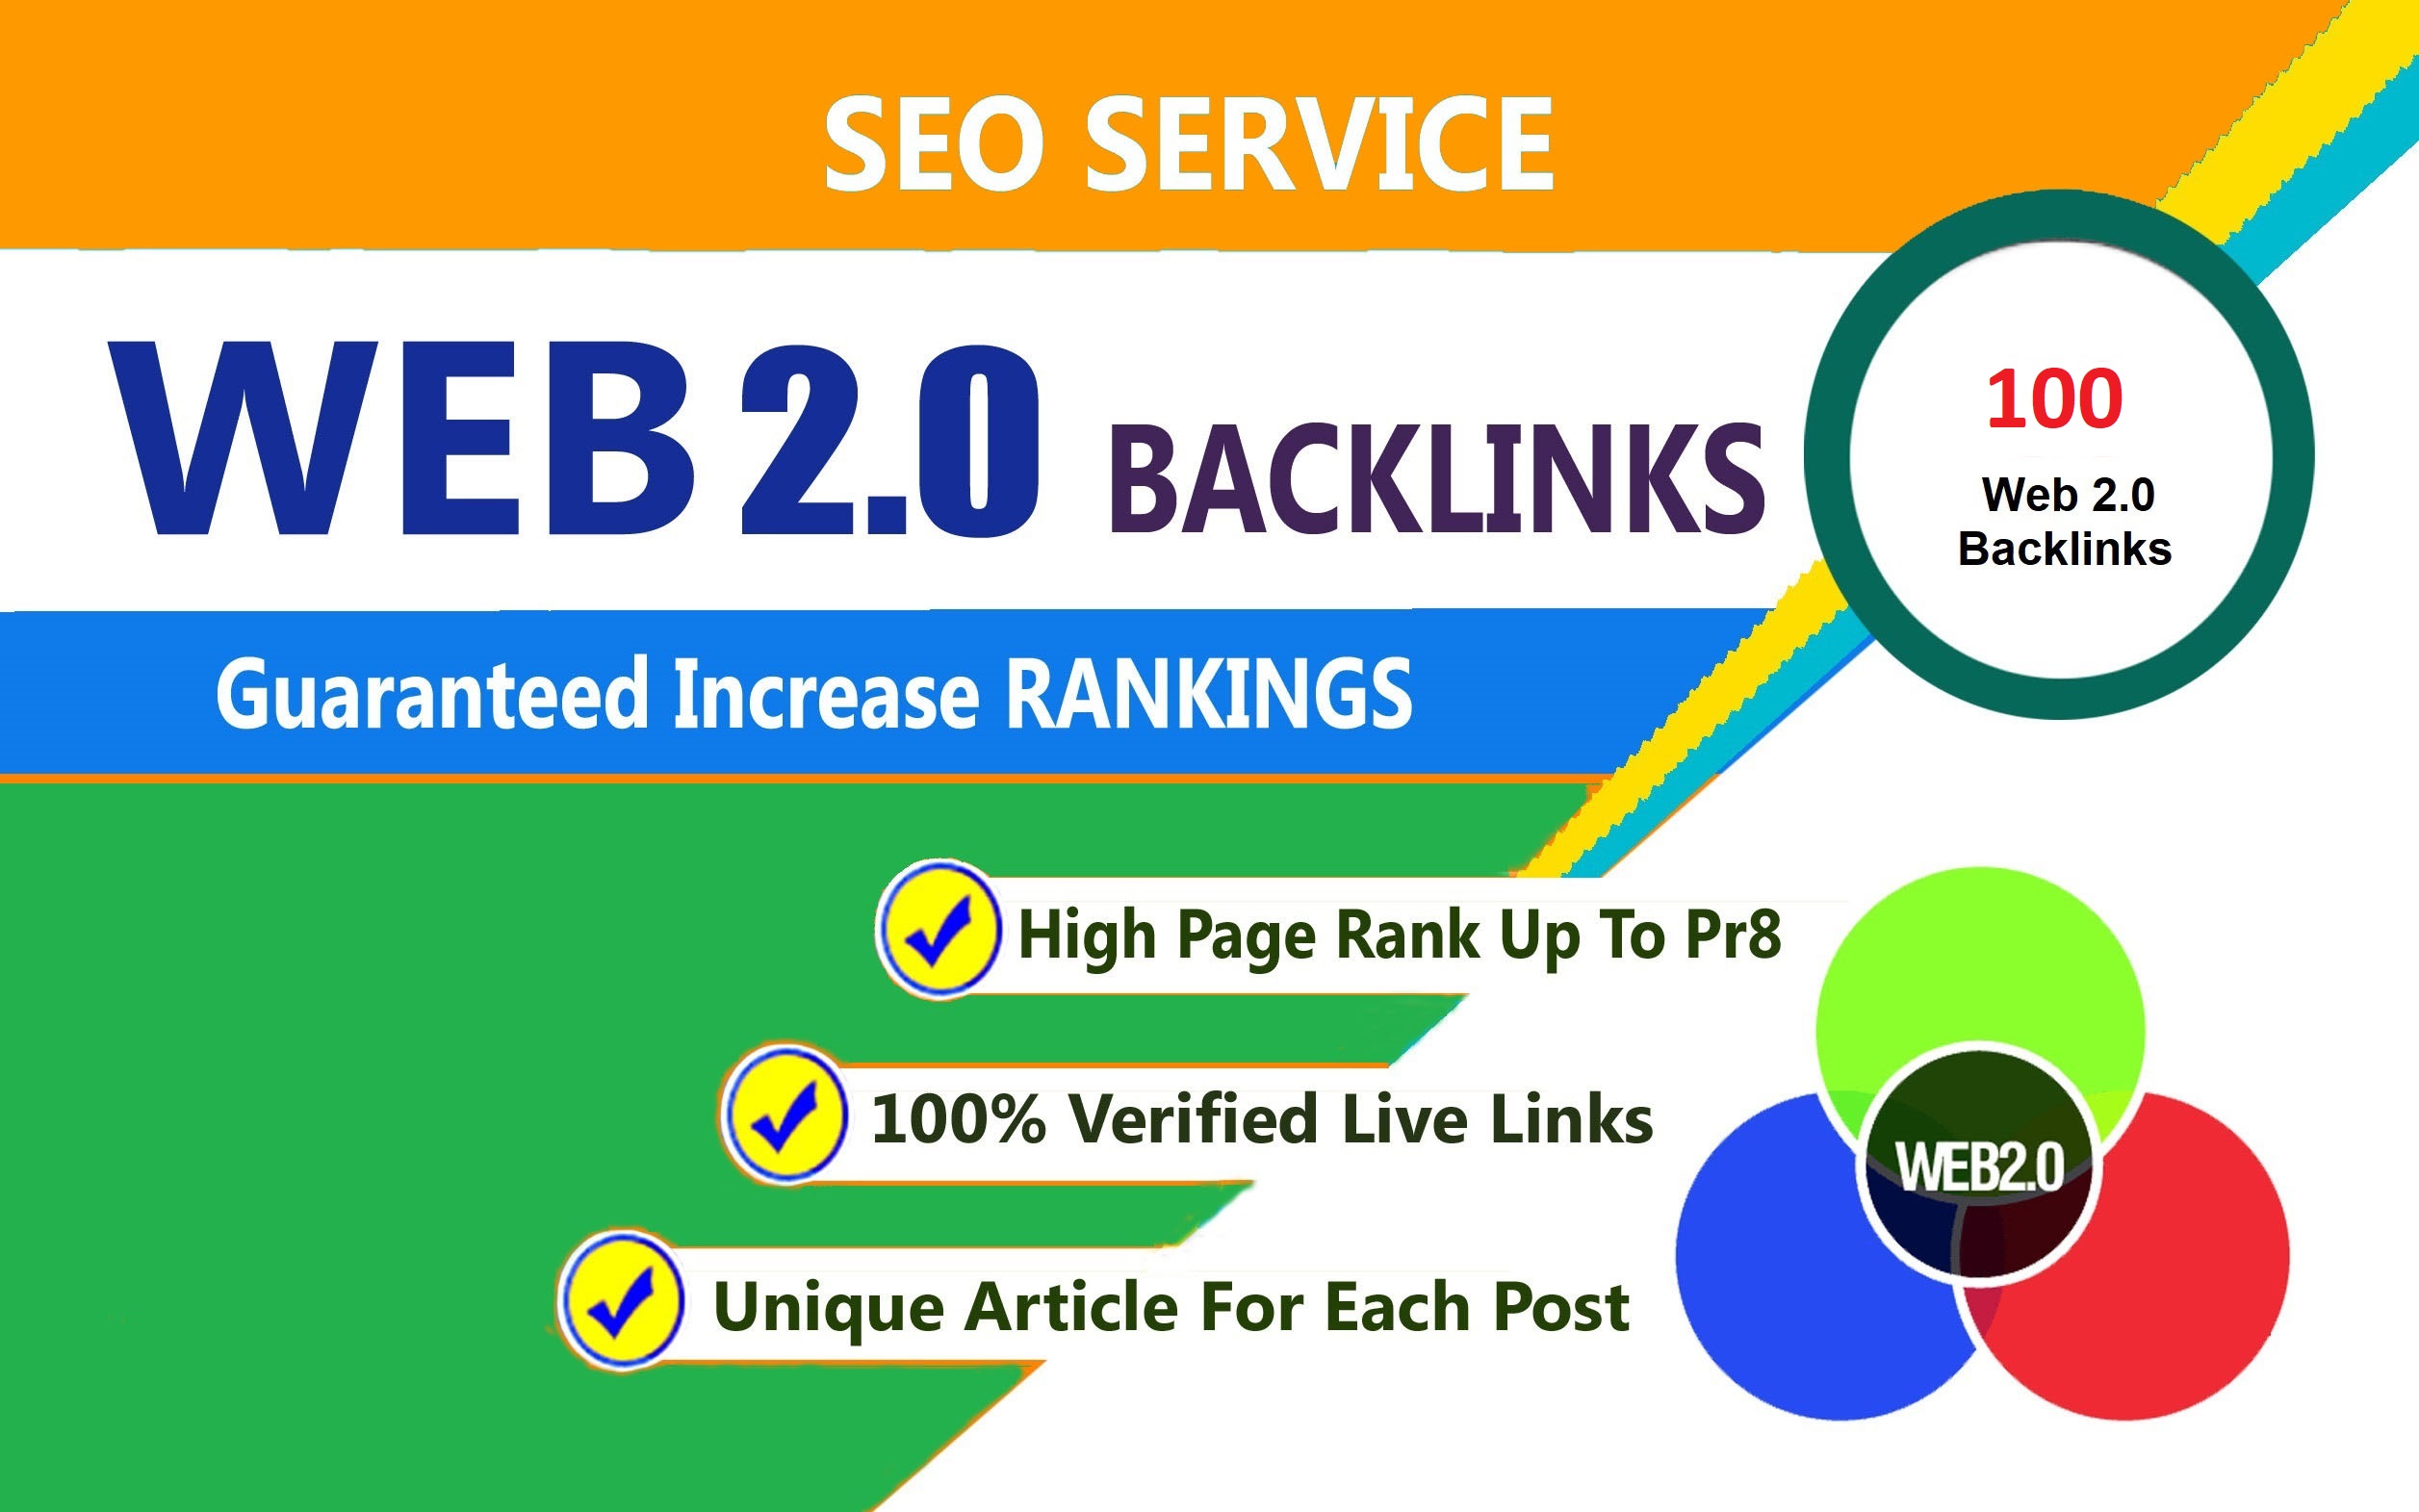  Get 100 Web 2.0 Contextual Backlinks, Buy Dofollow Links in Web 2.0 Blog Sites